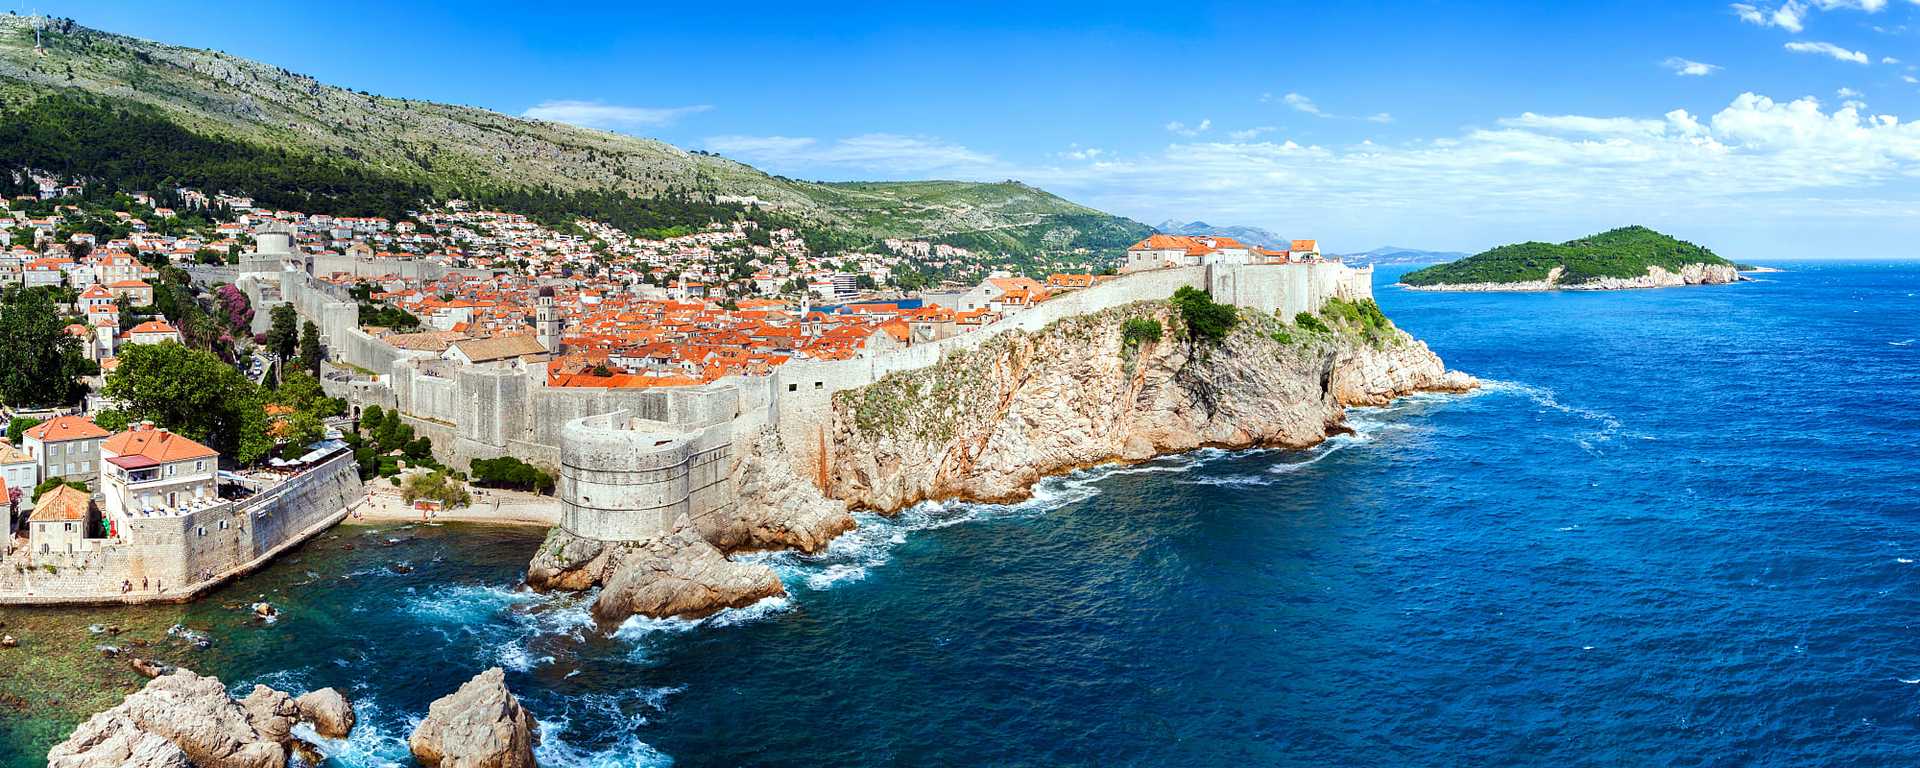 Dubrovnik overlooking the Adriatic Sea on the Dalmatian Coast in Croatia